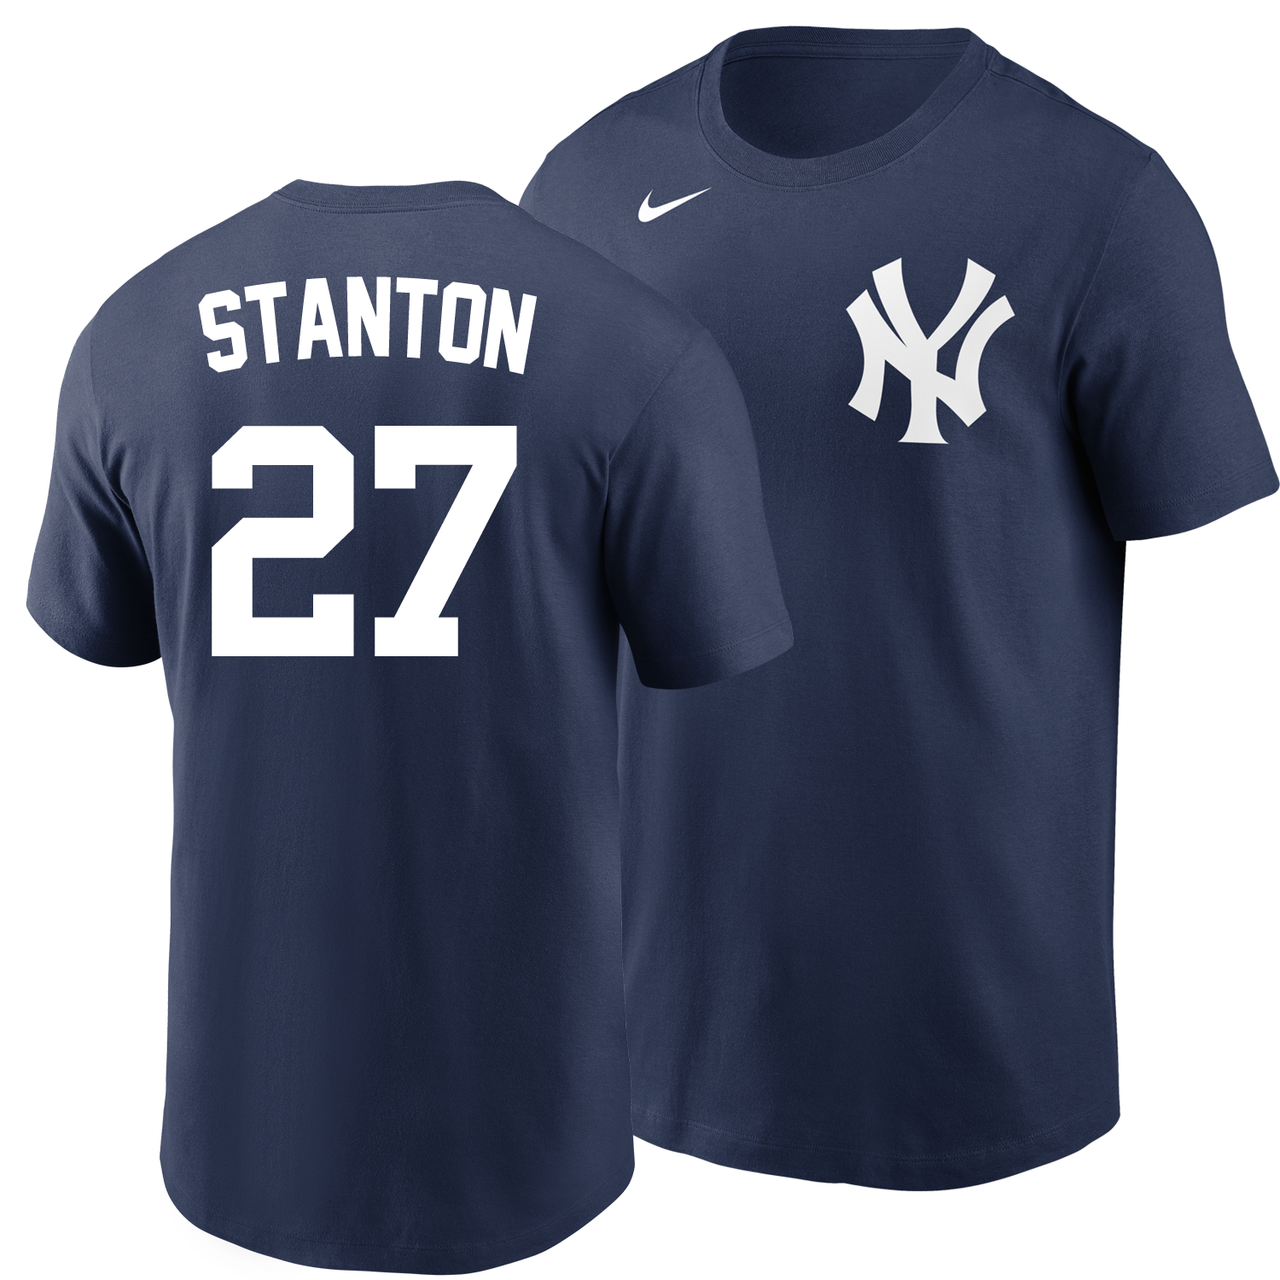 Giancarlo Stanton New York Yankees Nike Youth Name & Number T-Shirt - Navy